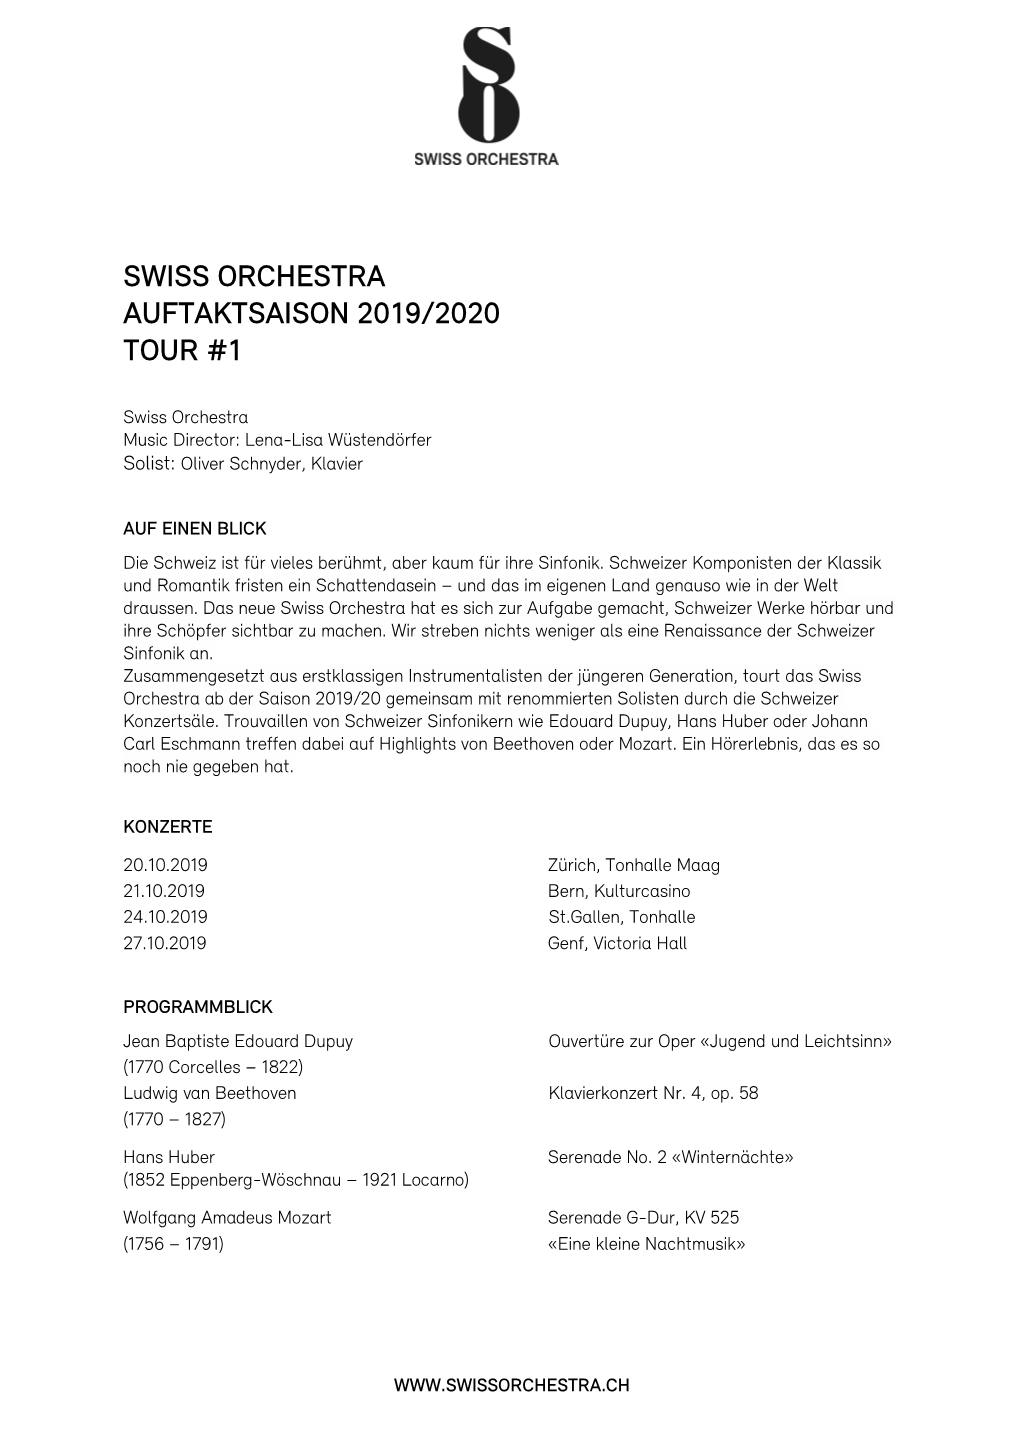 Swiss Orchestra Auftaktsaison 2019/2020 Tour #1